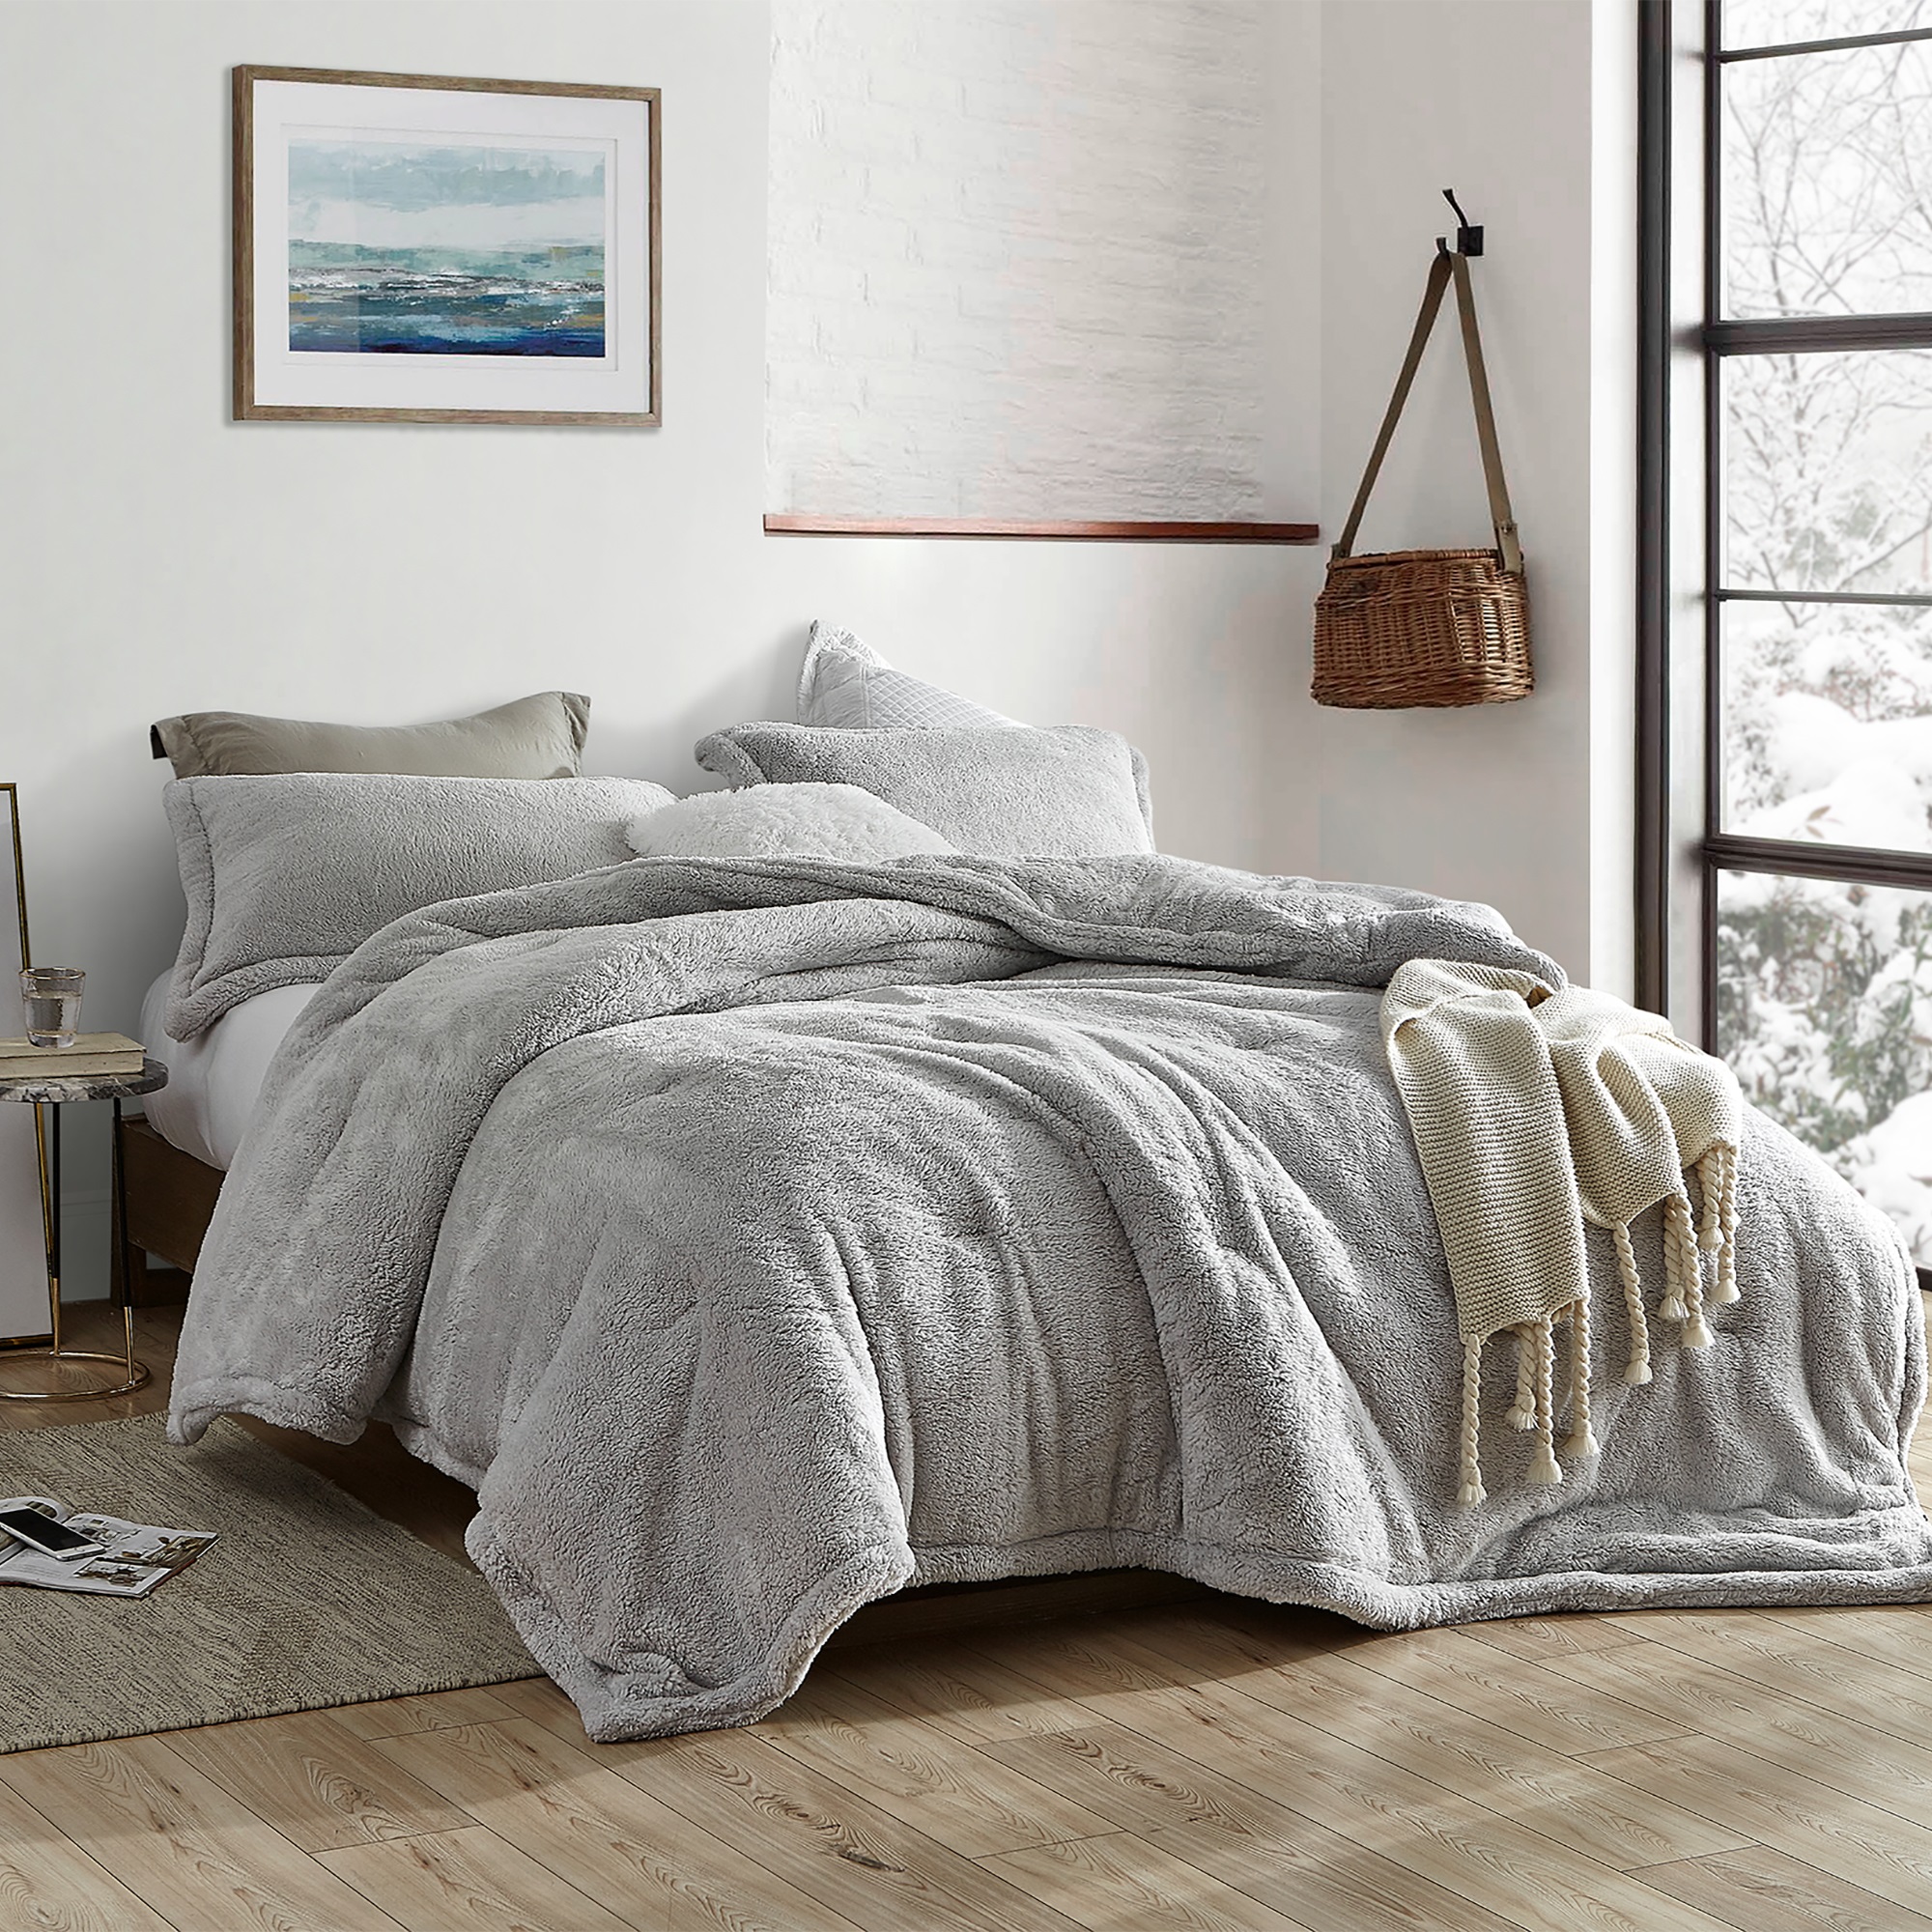 Coma Inducer Oversized Comforter - The Original Plush - Silver Stone